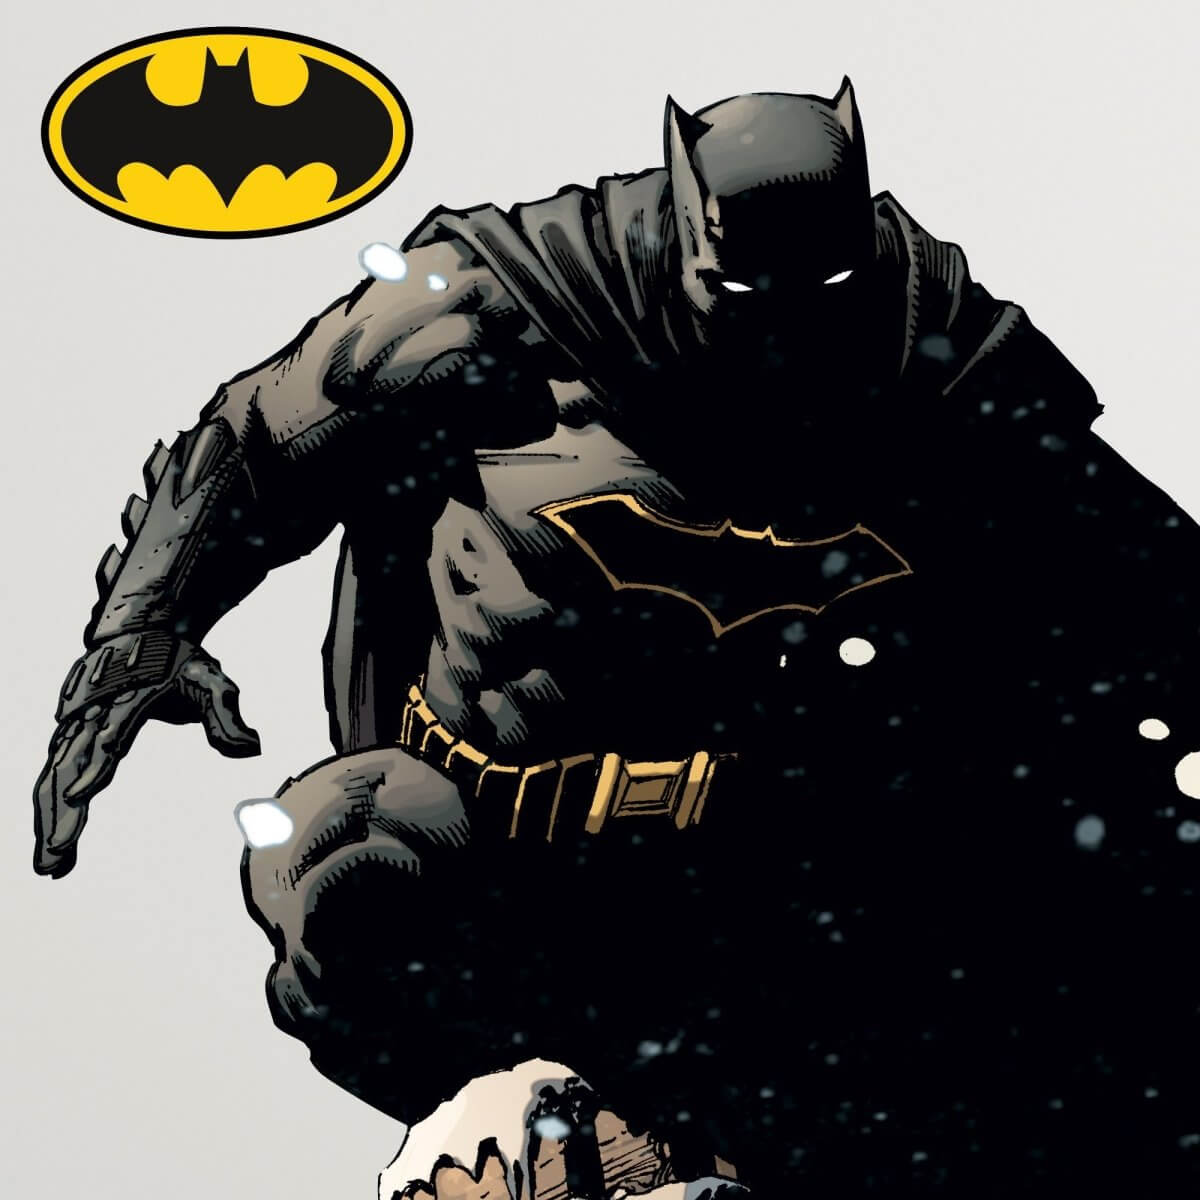 Batman Annual #1 Comic Cover Series Licensed Wall Sticker